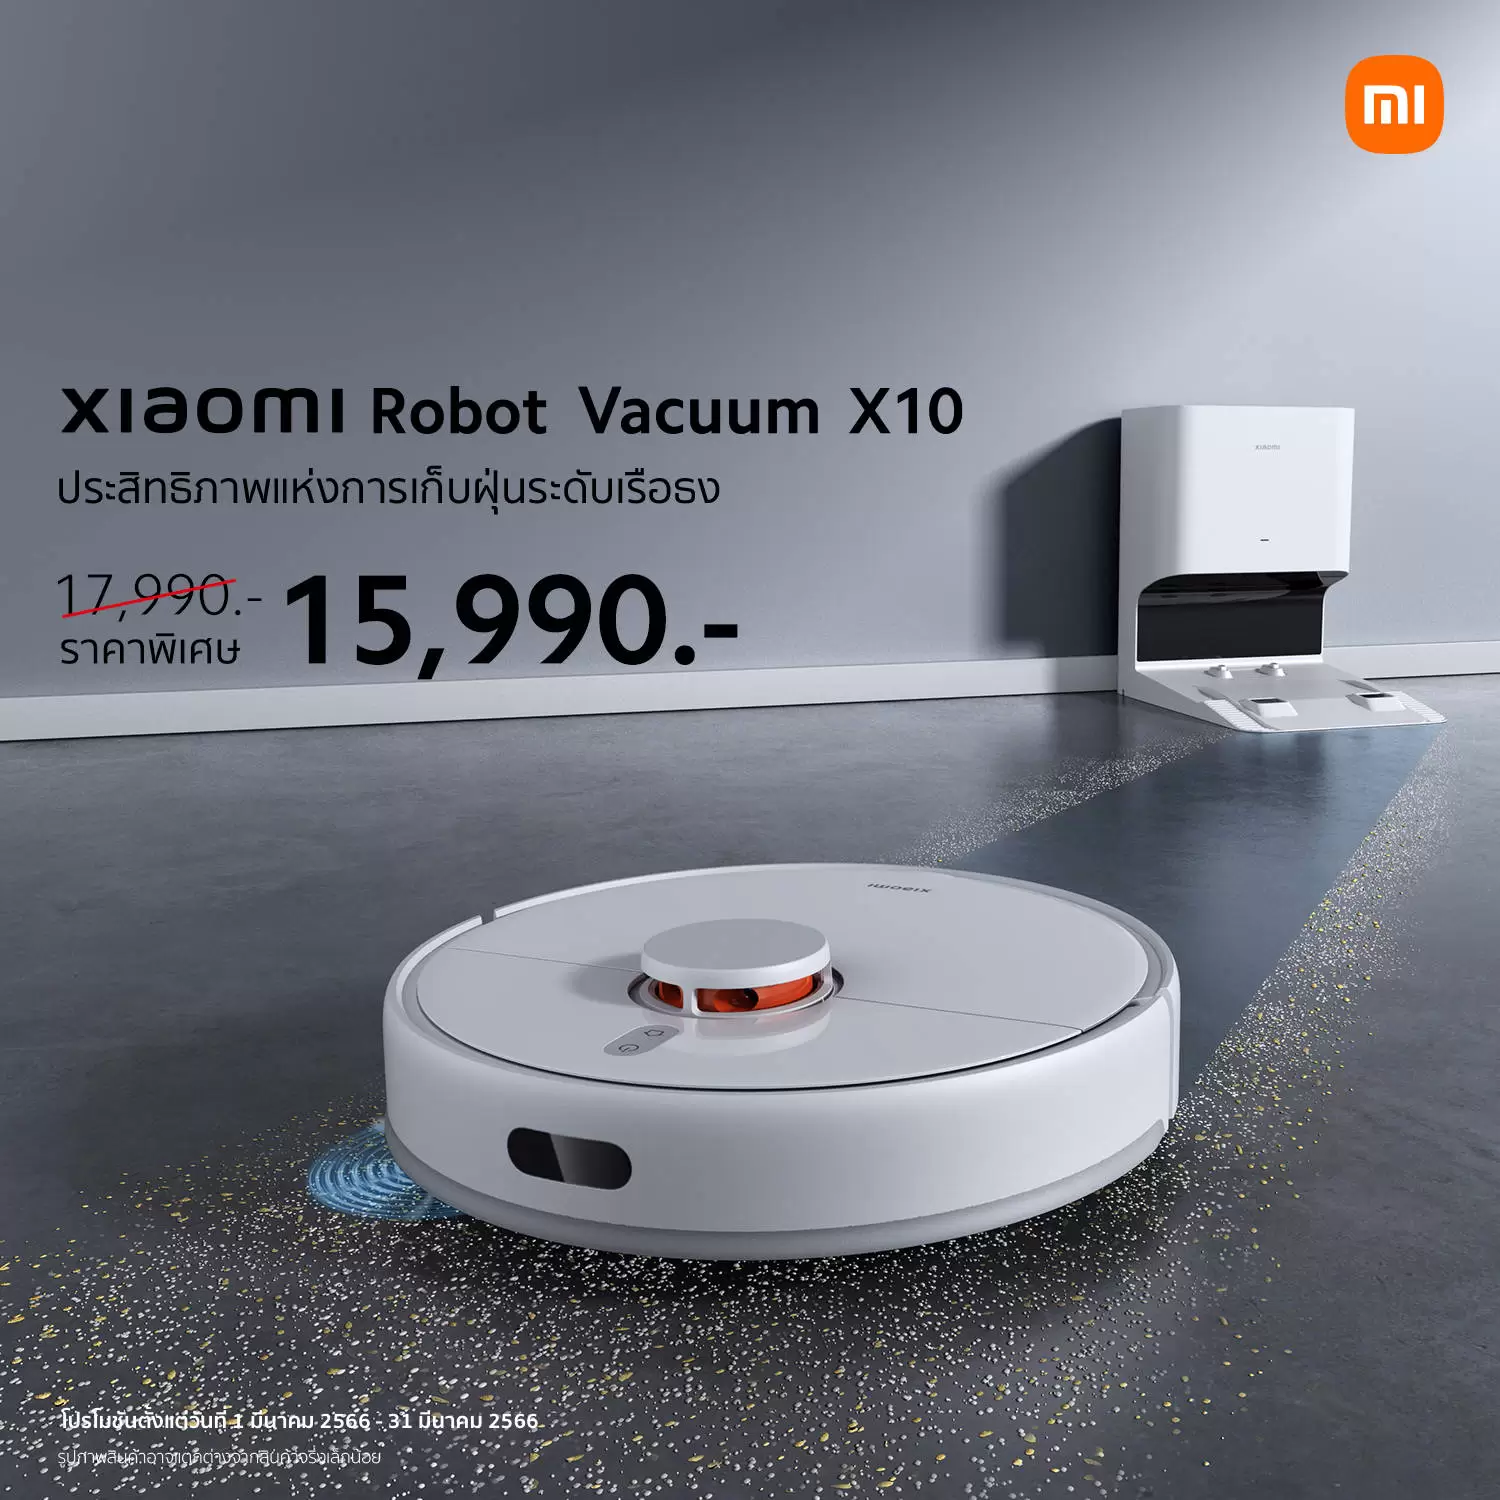 Xiaomi Robot Vacuum X10 KV | Xiaomi | รวมข้อมูล AIoT รุ่นใหม่ของ Xiaomi นาฬิกา, หูฟัง และ หุ่นยนต์ดูดฝุ่น ราคาและโปรโมชั่น